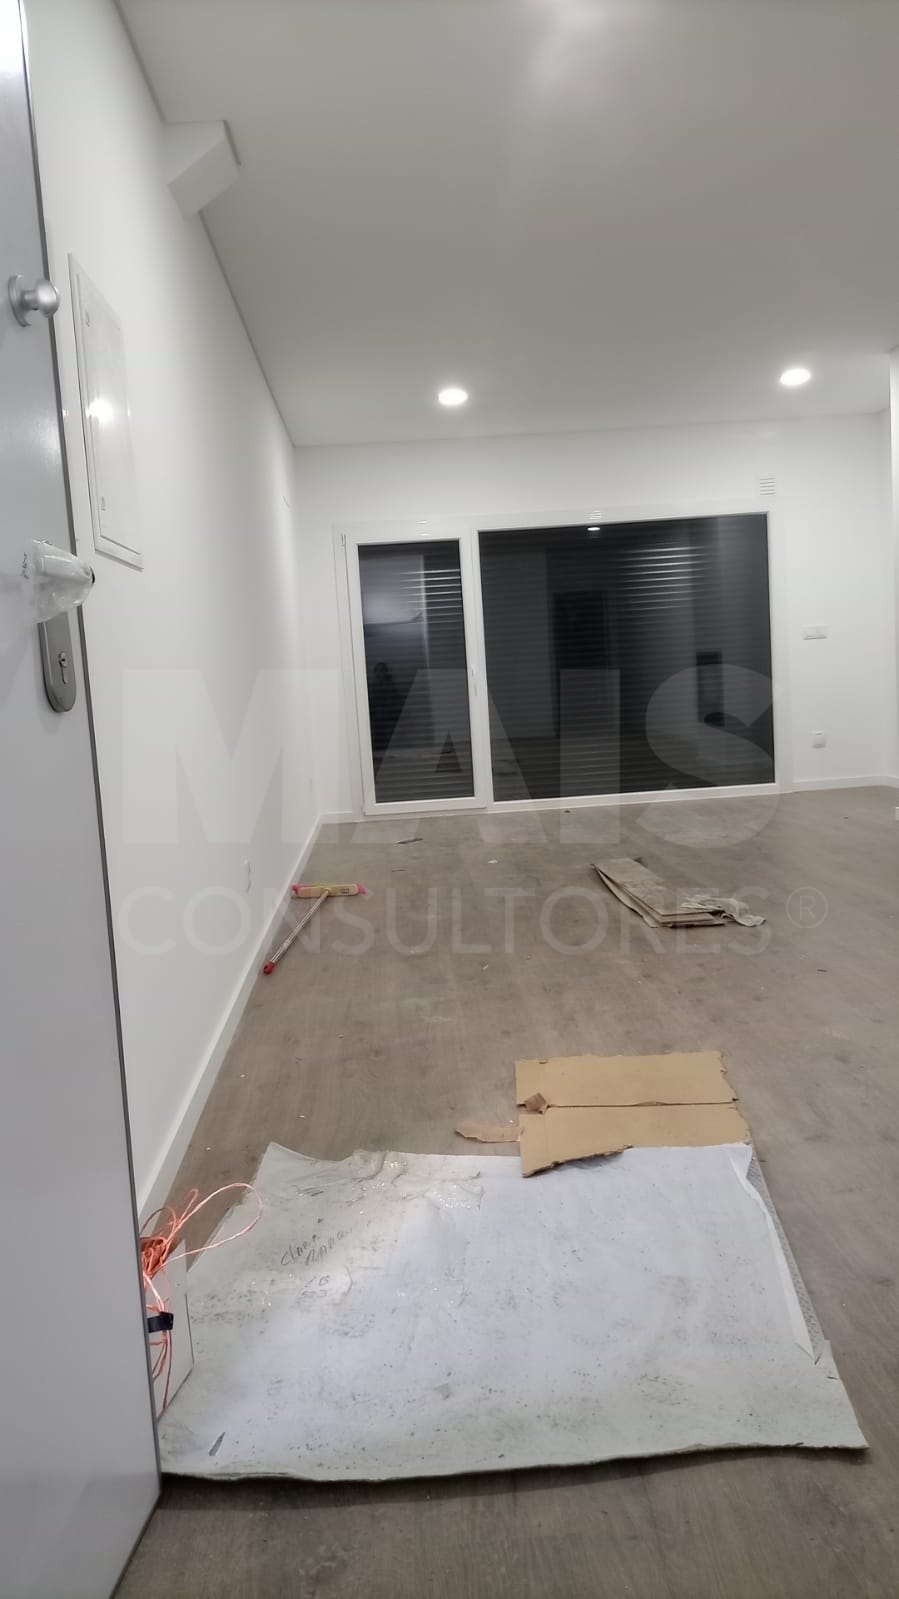 New 3-bedroom house in Fernão Ferro